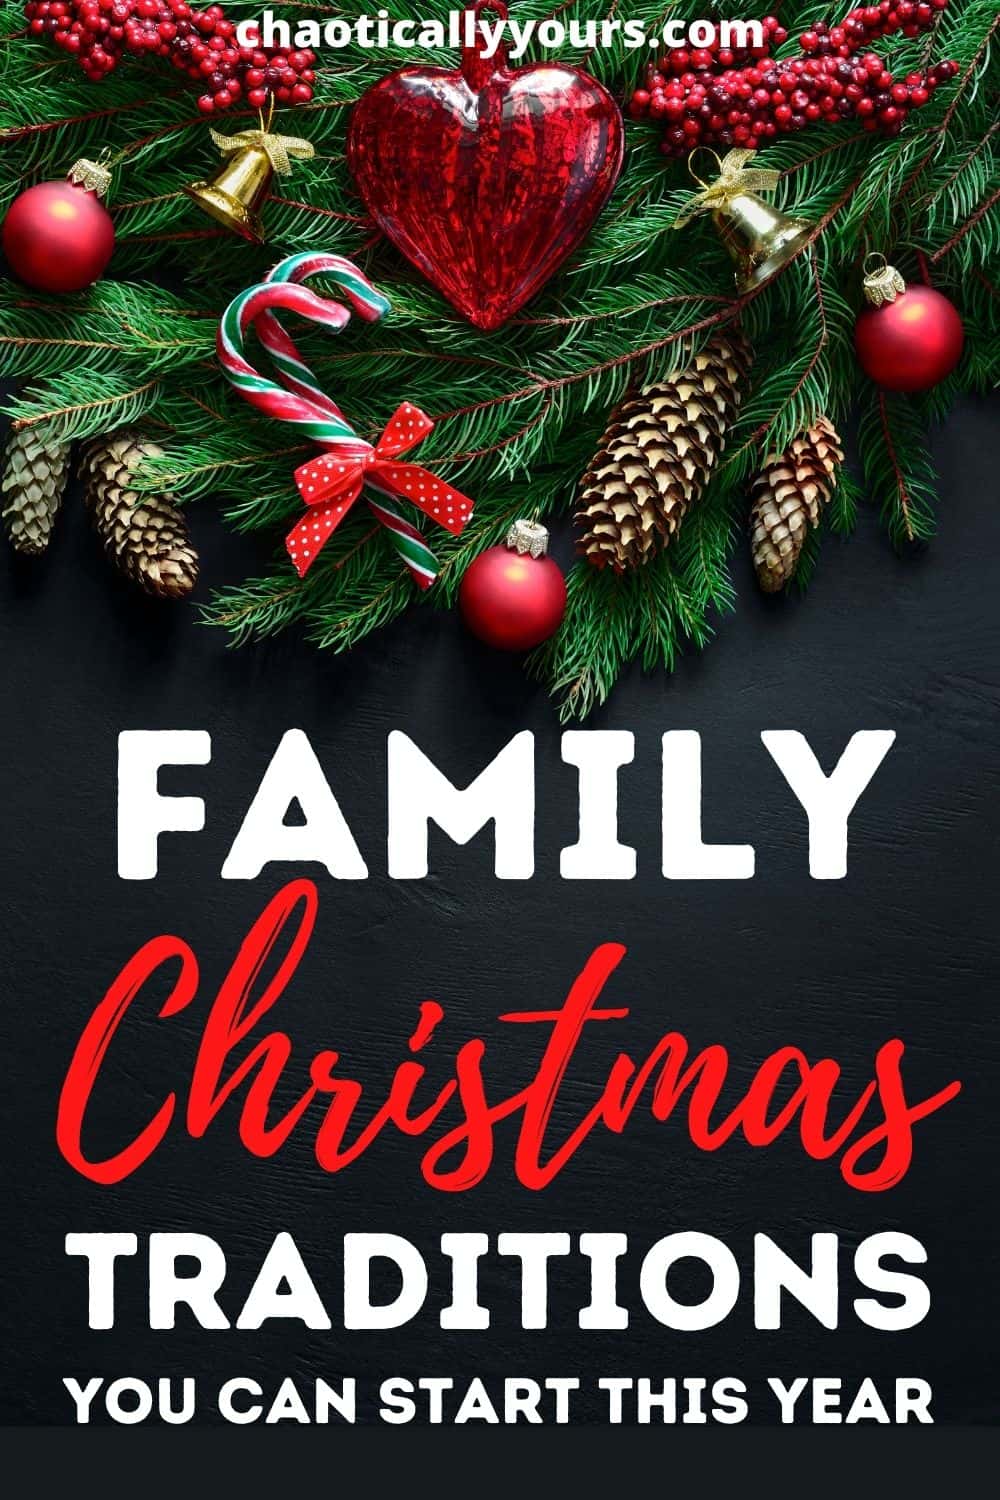 Family Christmas Traditions pin image